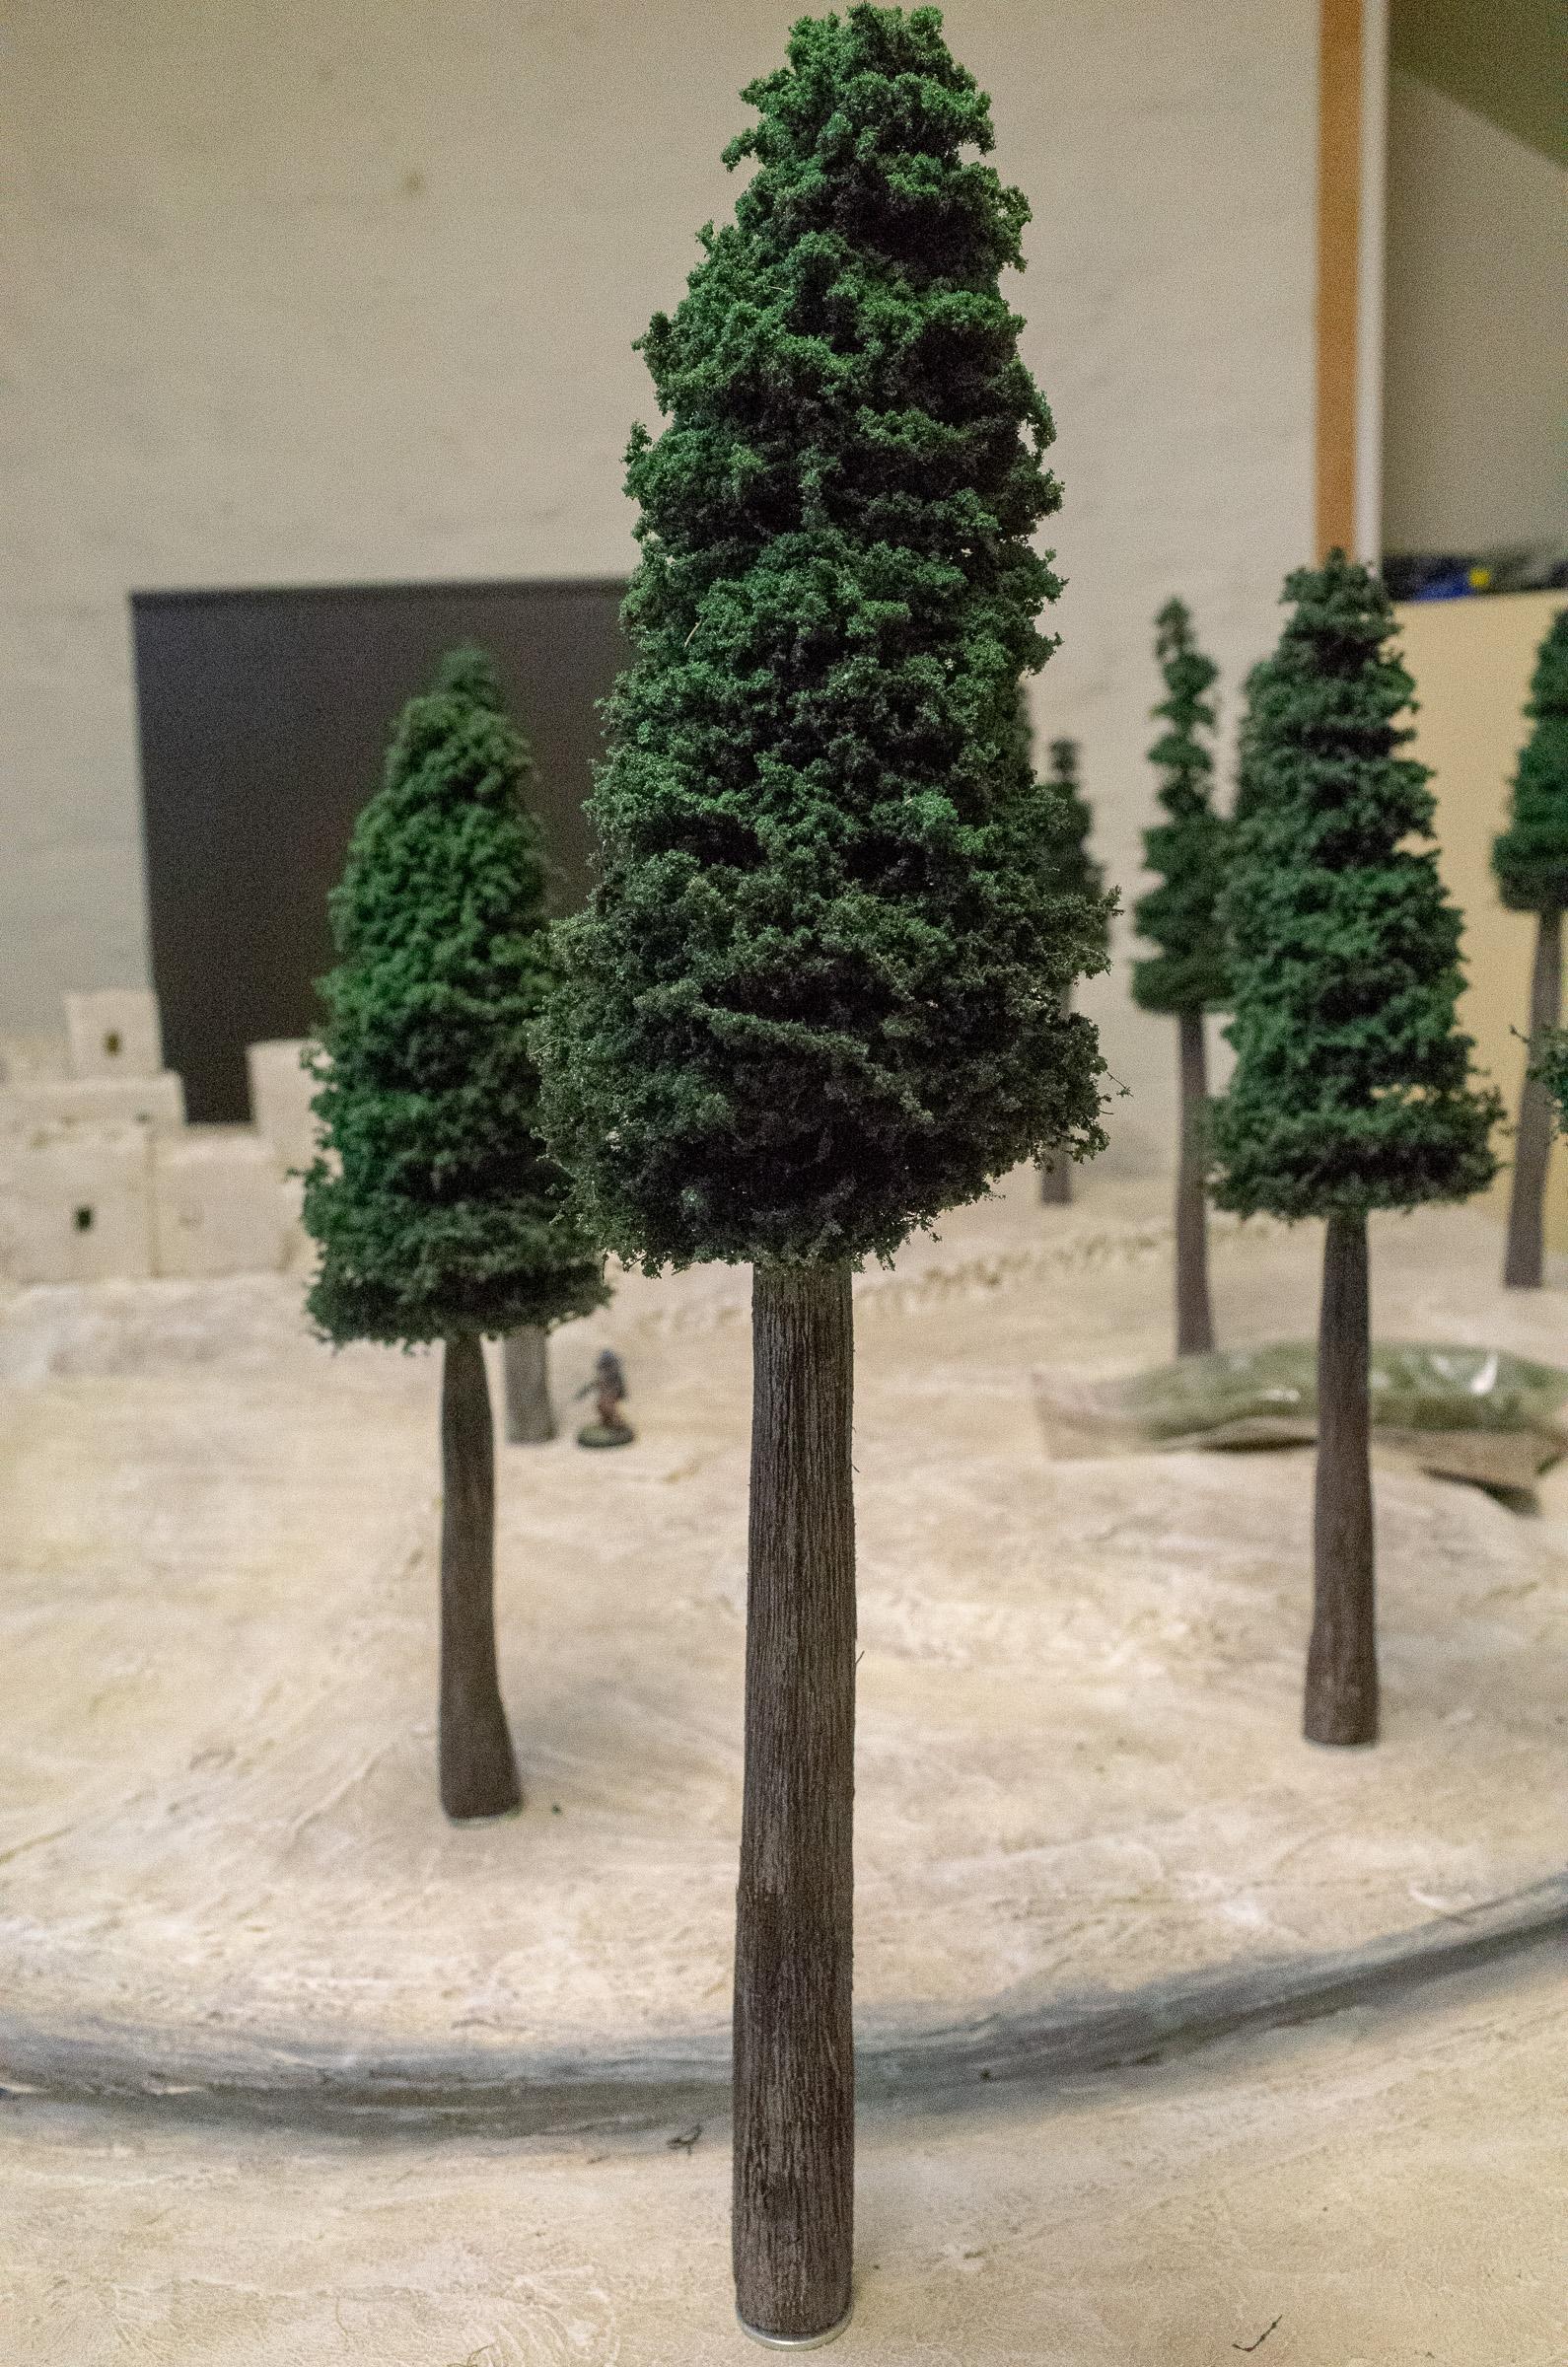 Maelstrom's Edge, Terrain, Trees